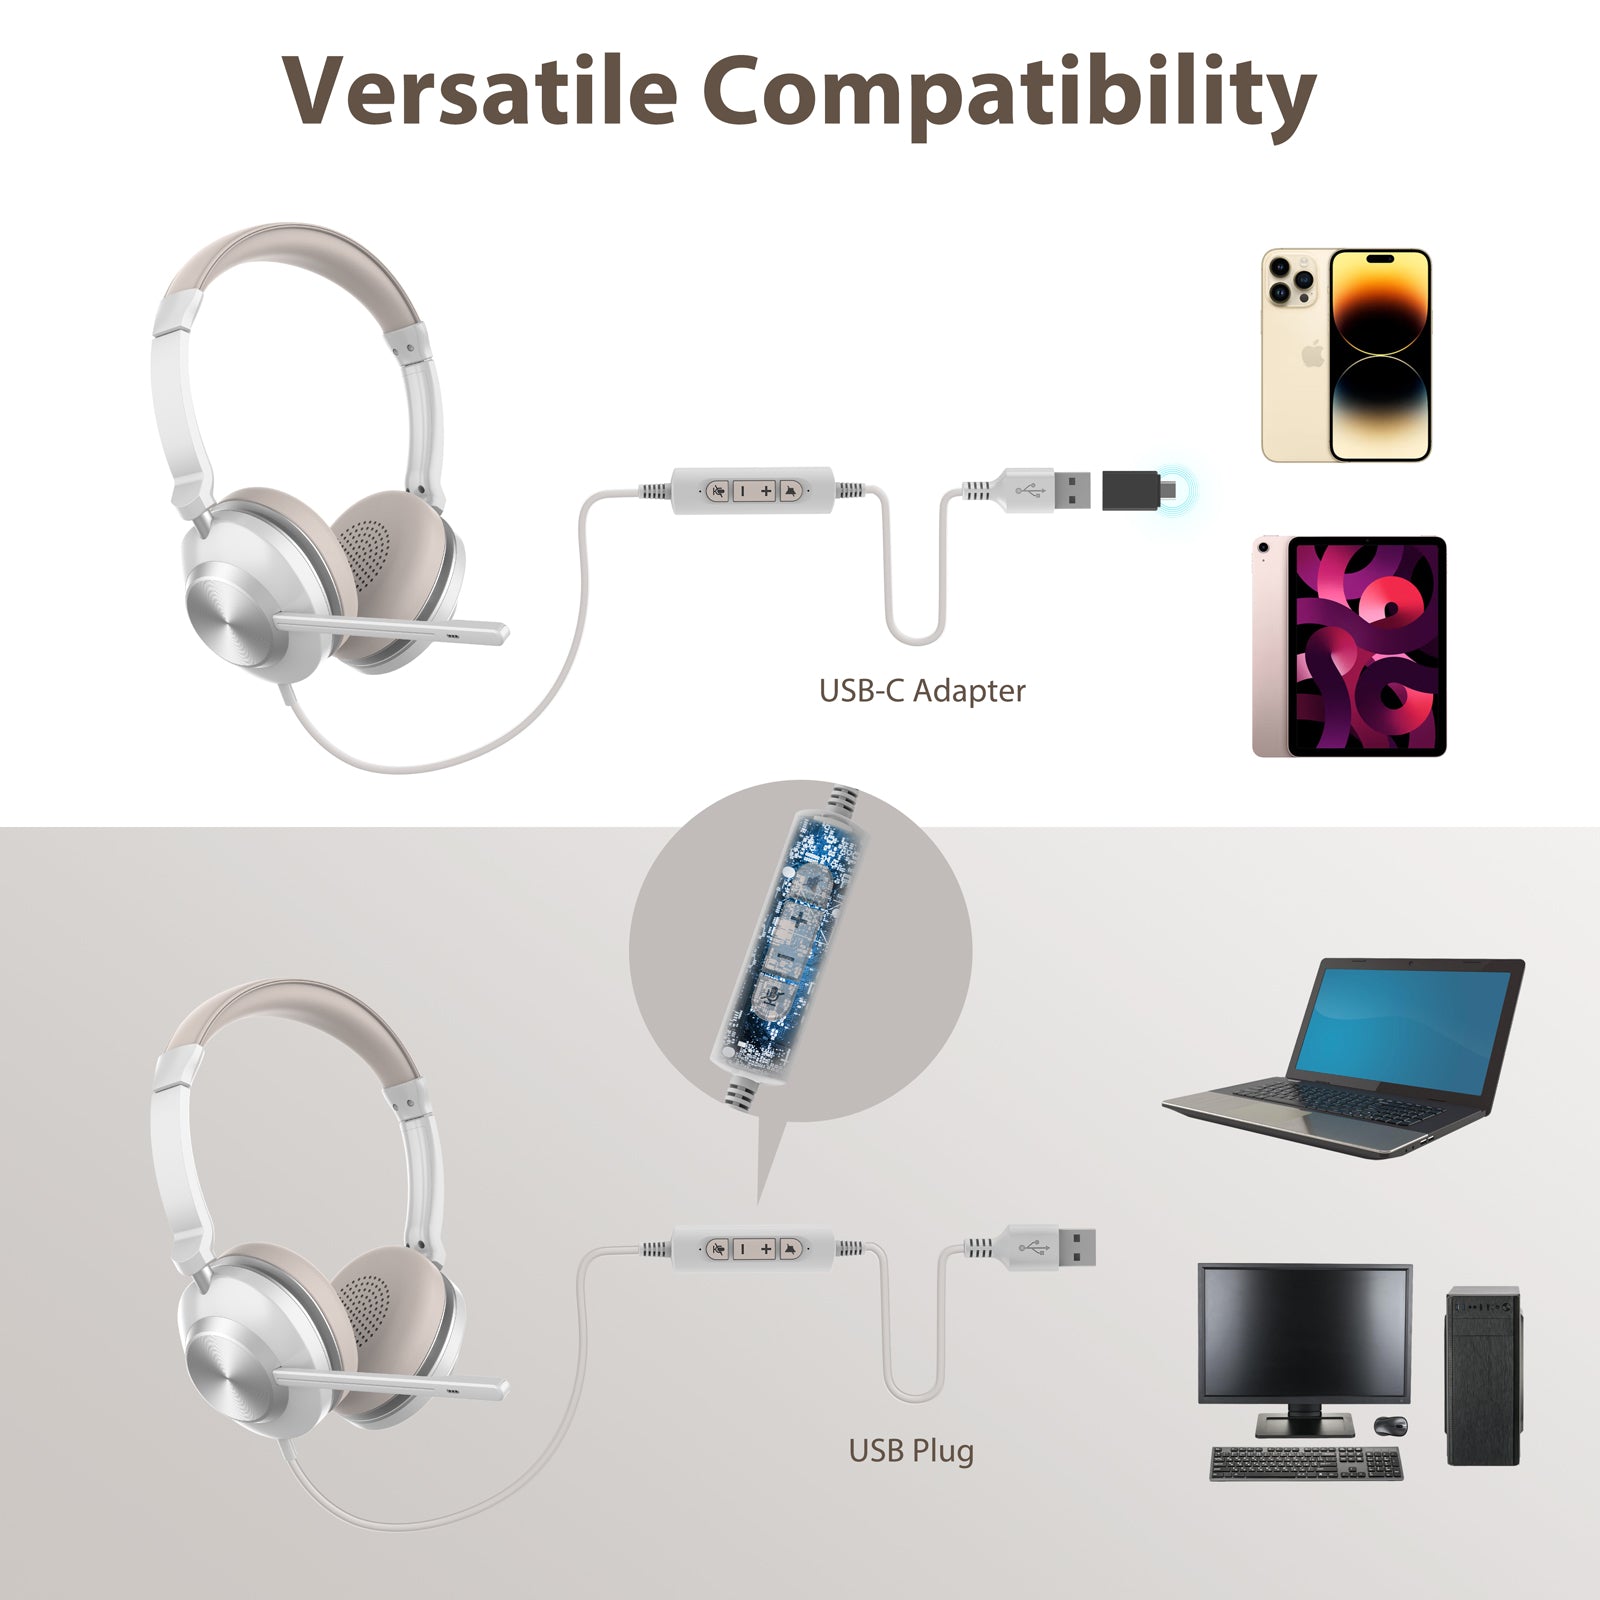 Versatile compatibility,USB-C adapter,USB plug.